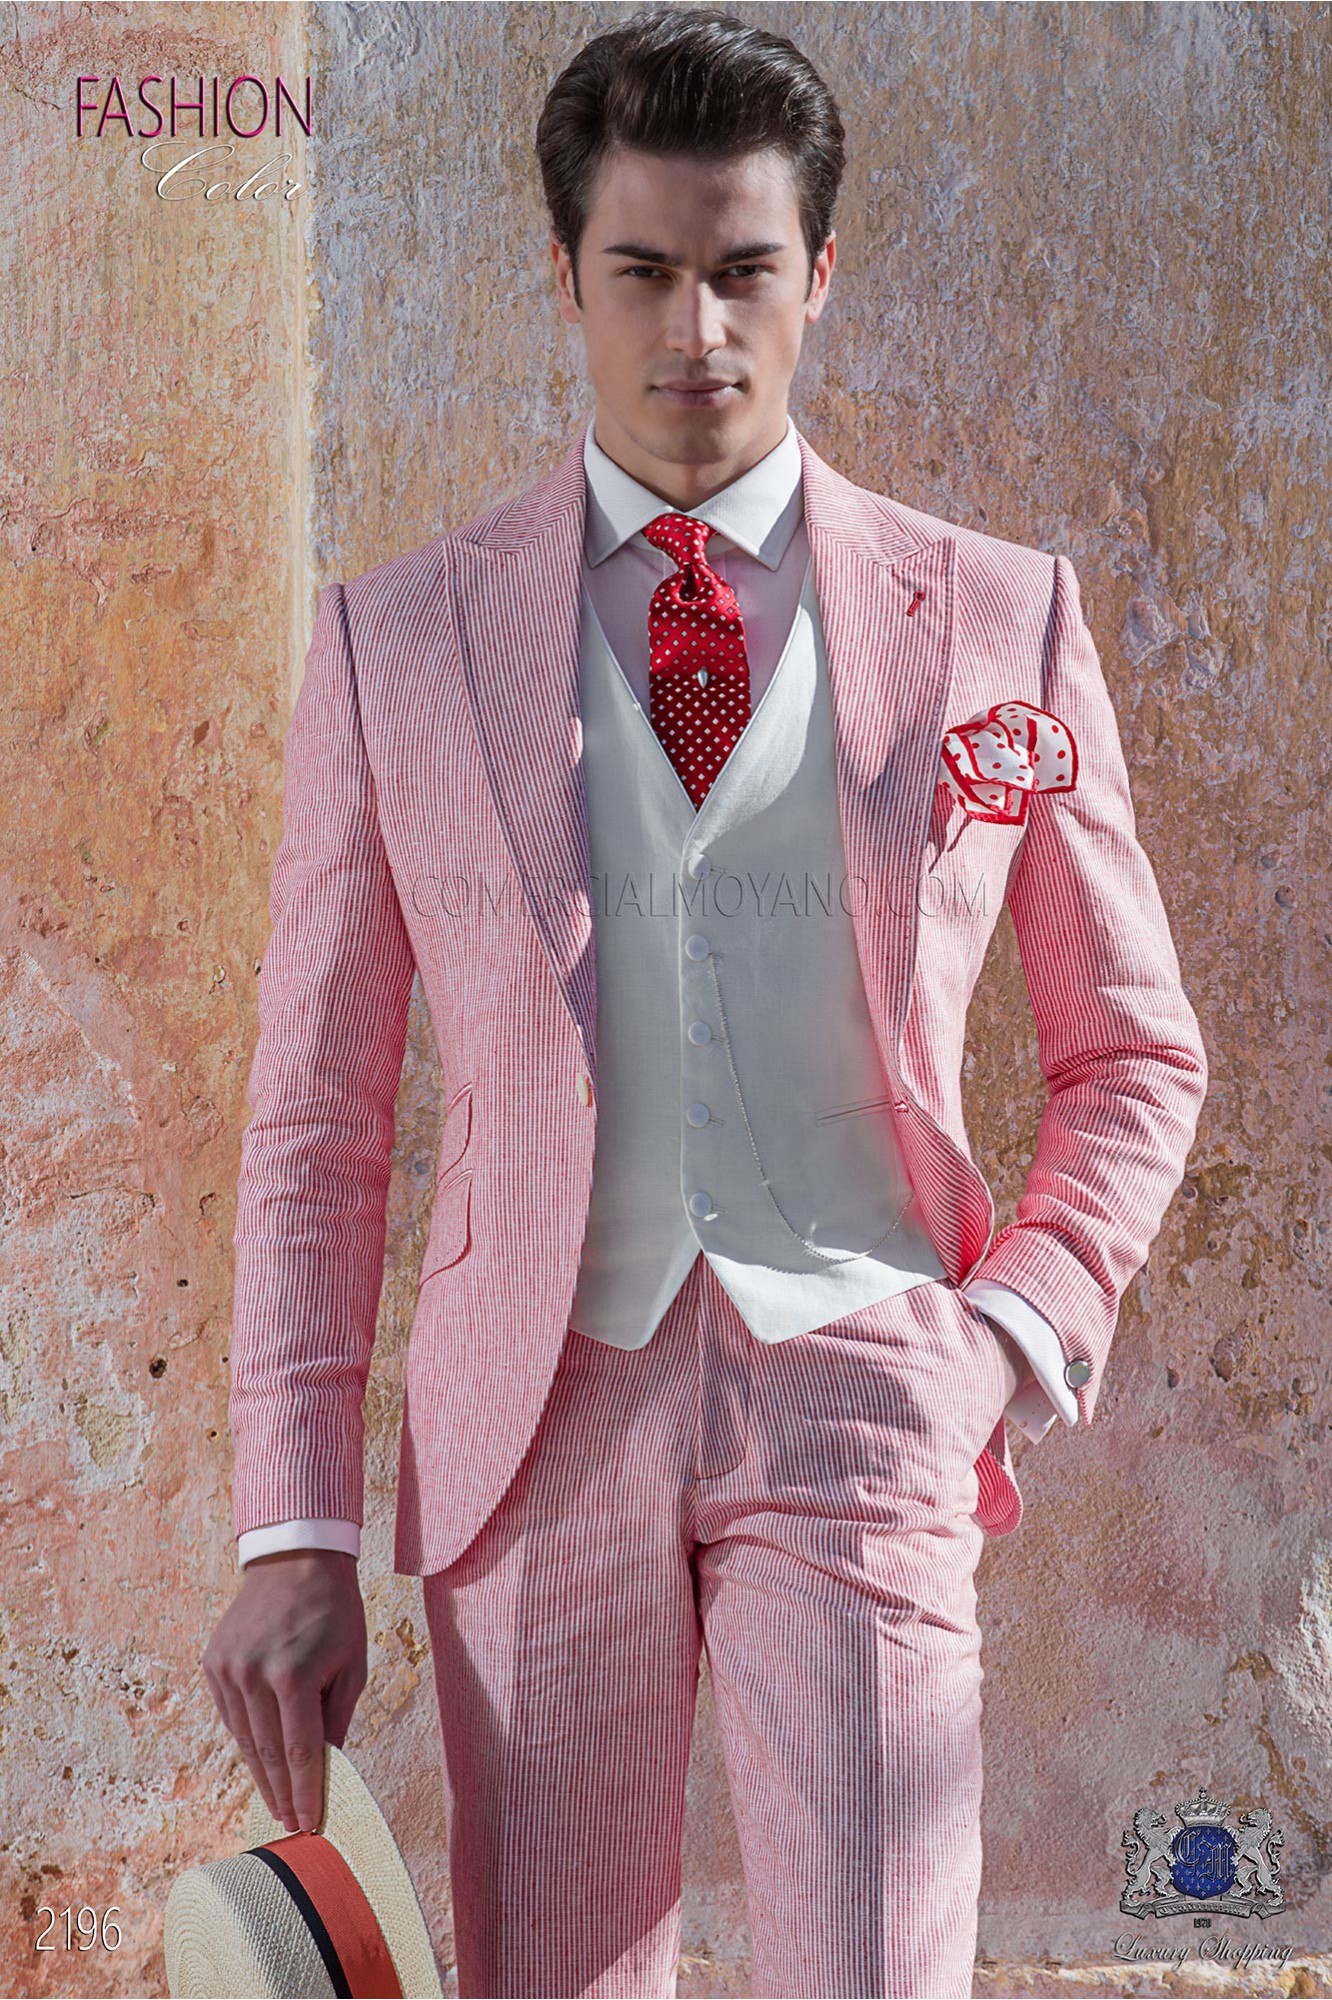 Traje de novio de lino rojo con raya blanca modelo: 2196 Mario Moyano colección Hipster